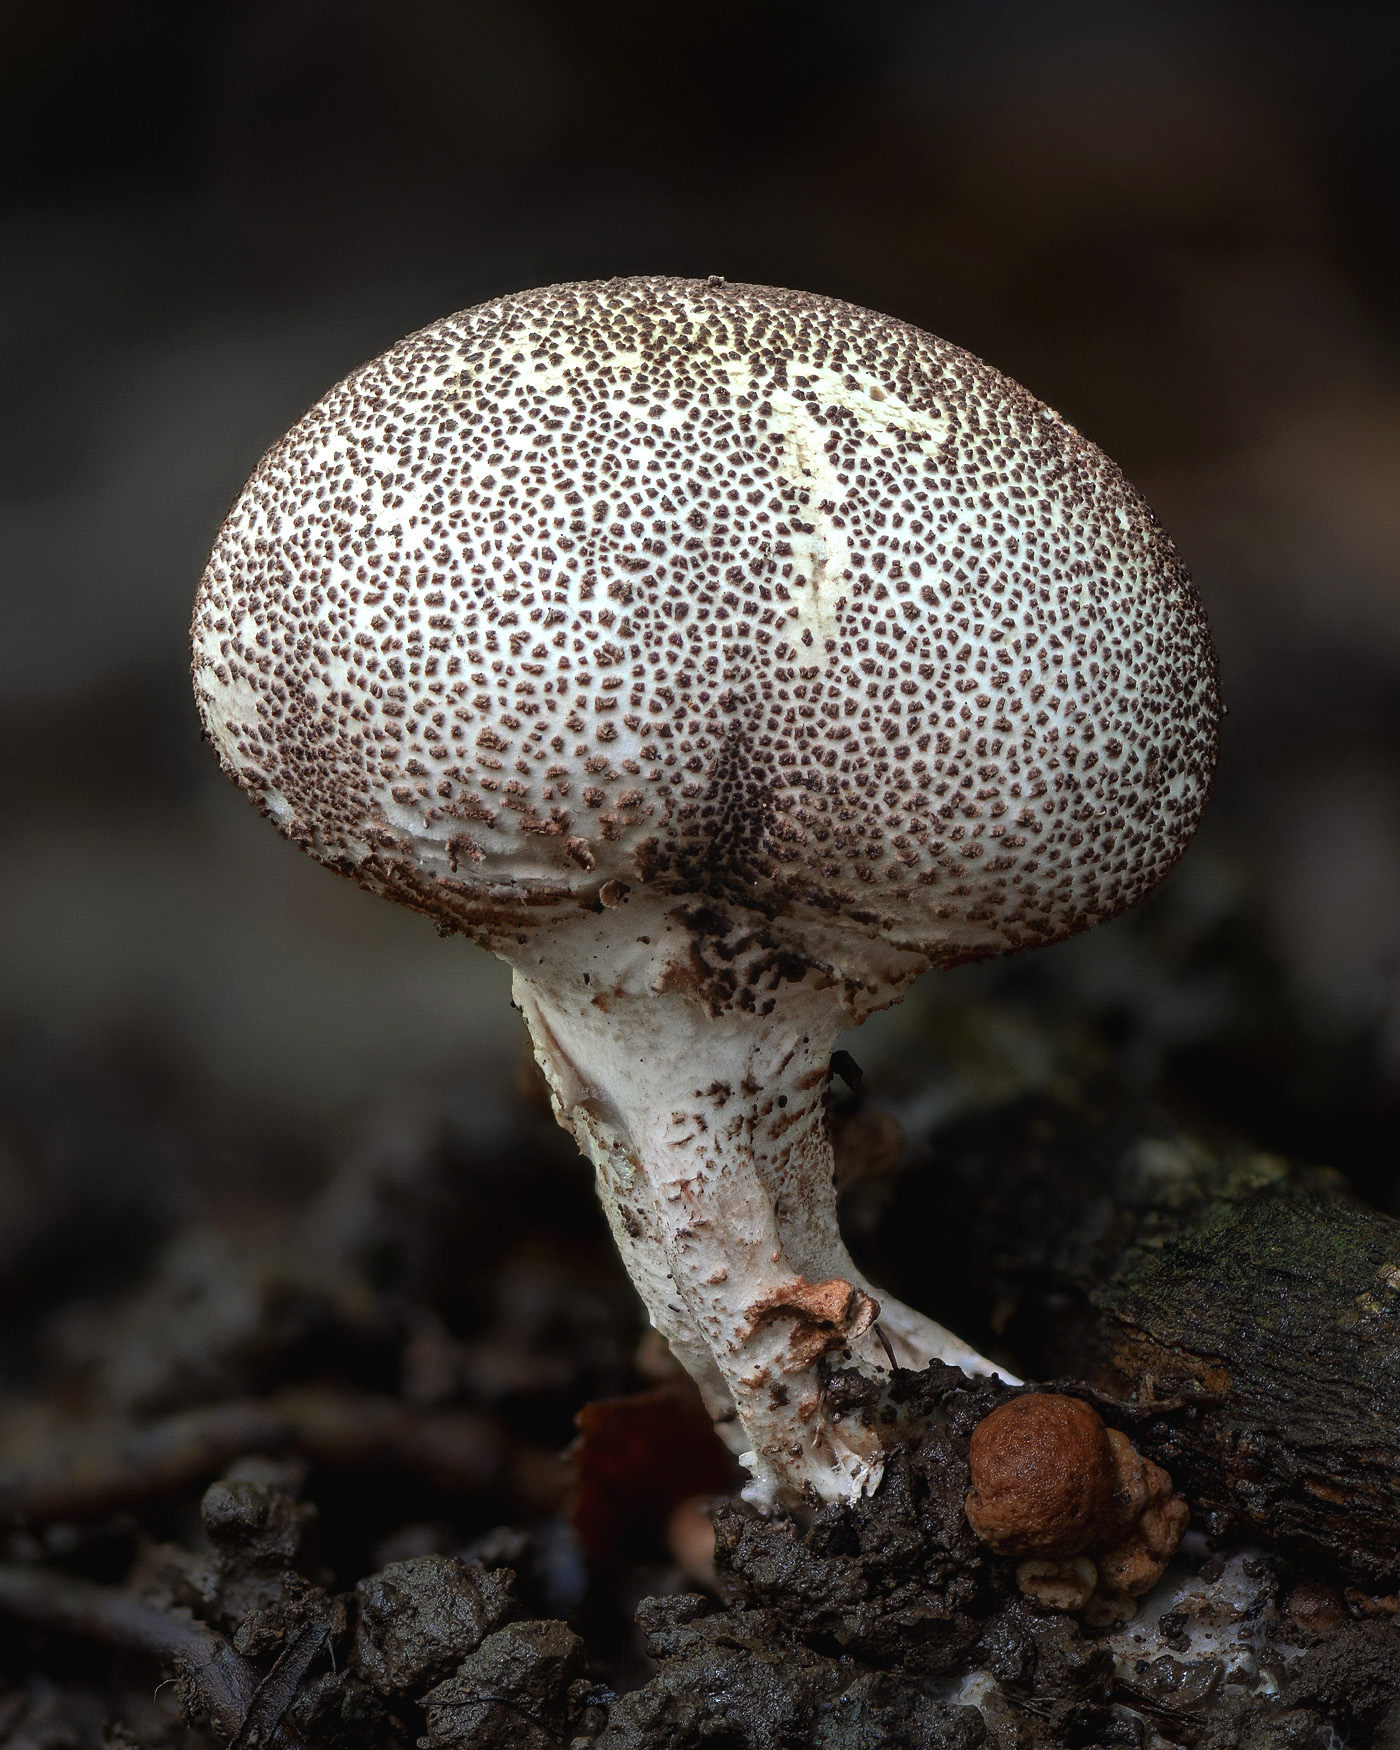 Principe puffball fungus, unknown species